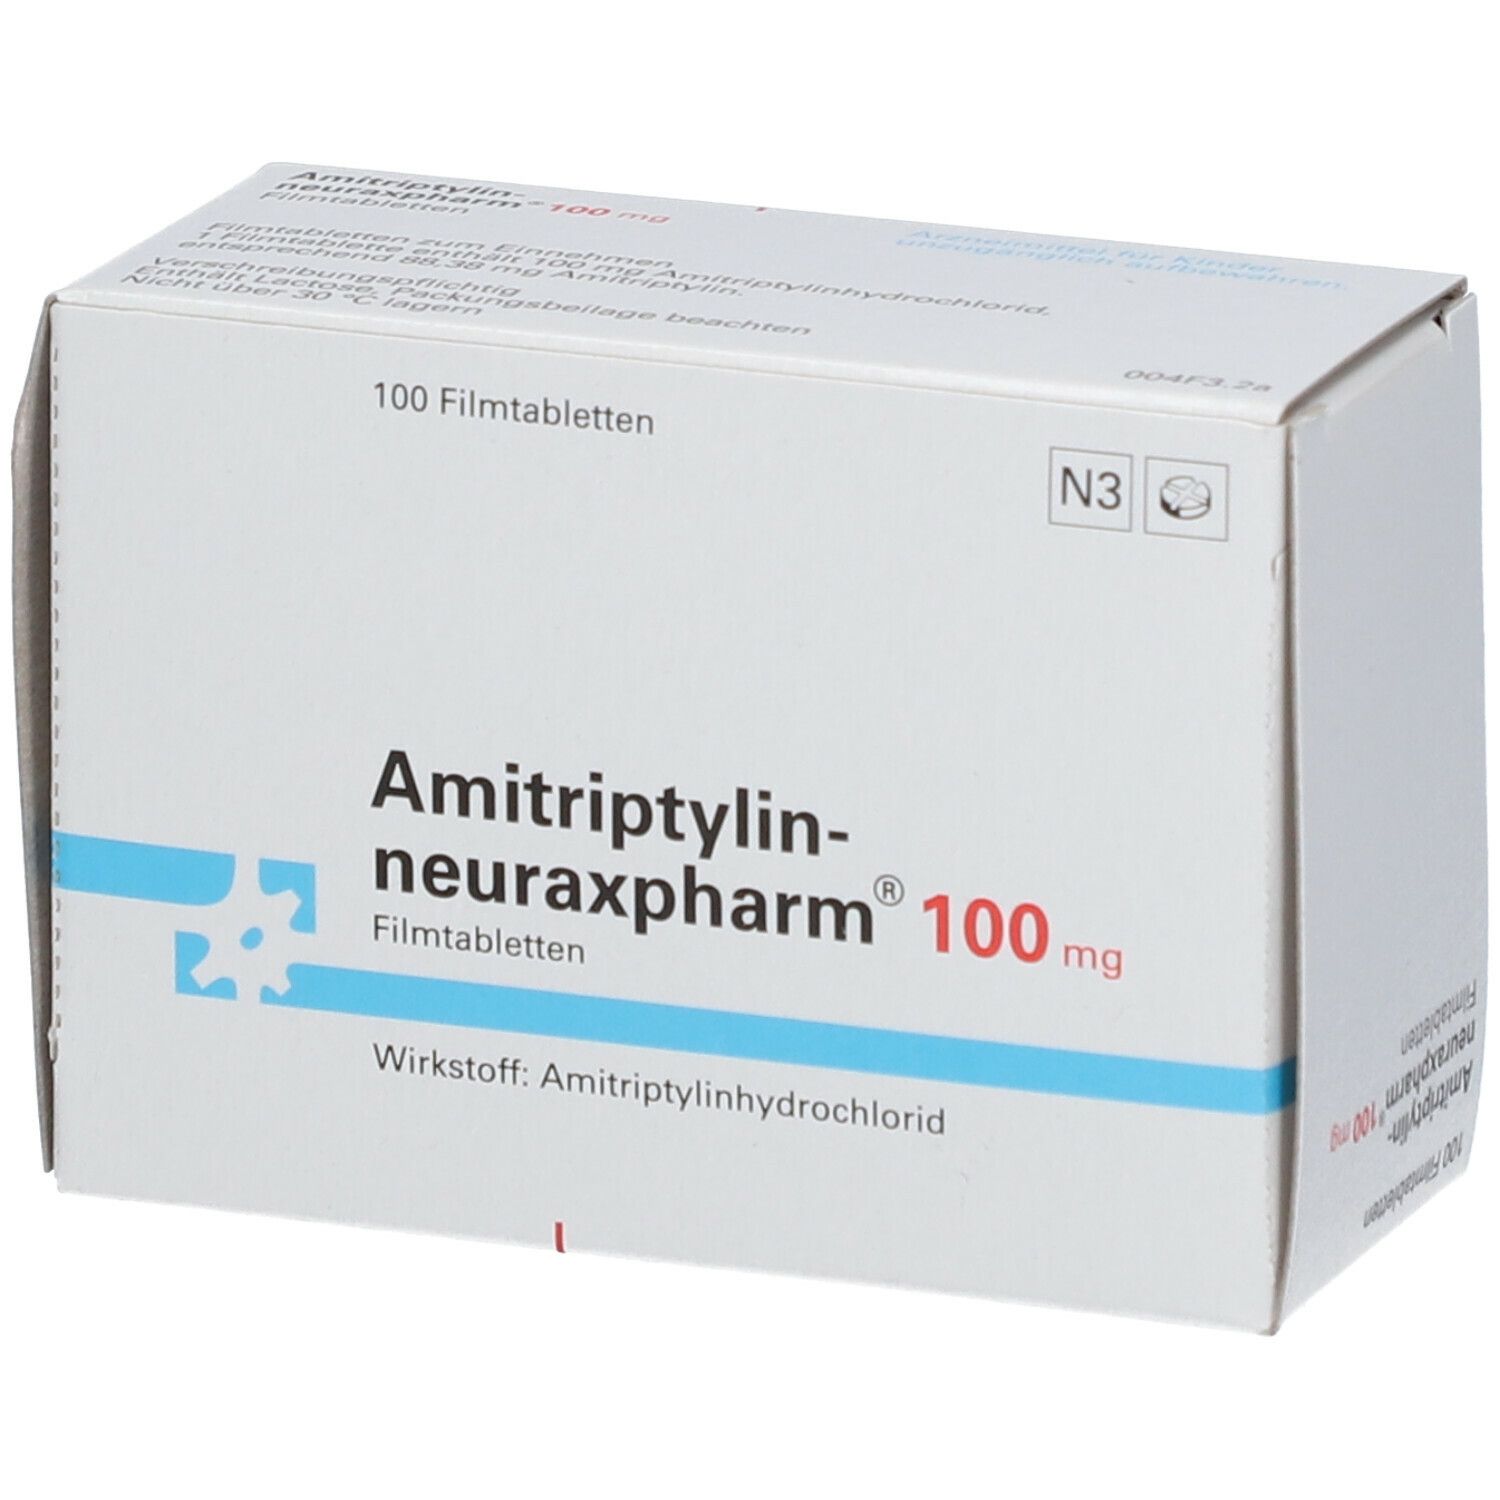 Amitriptylin-neuraxpharm® 100 mg